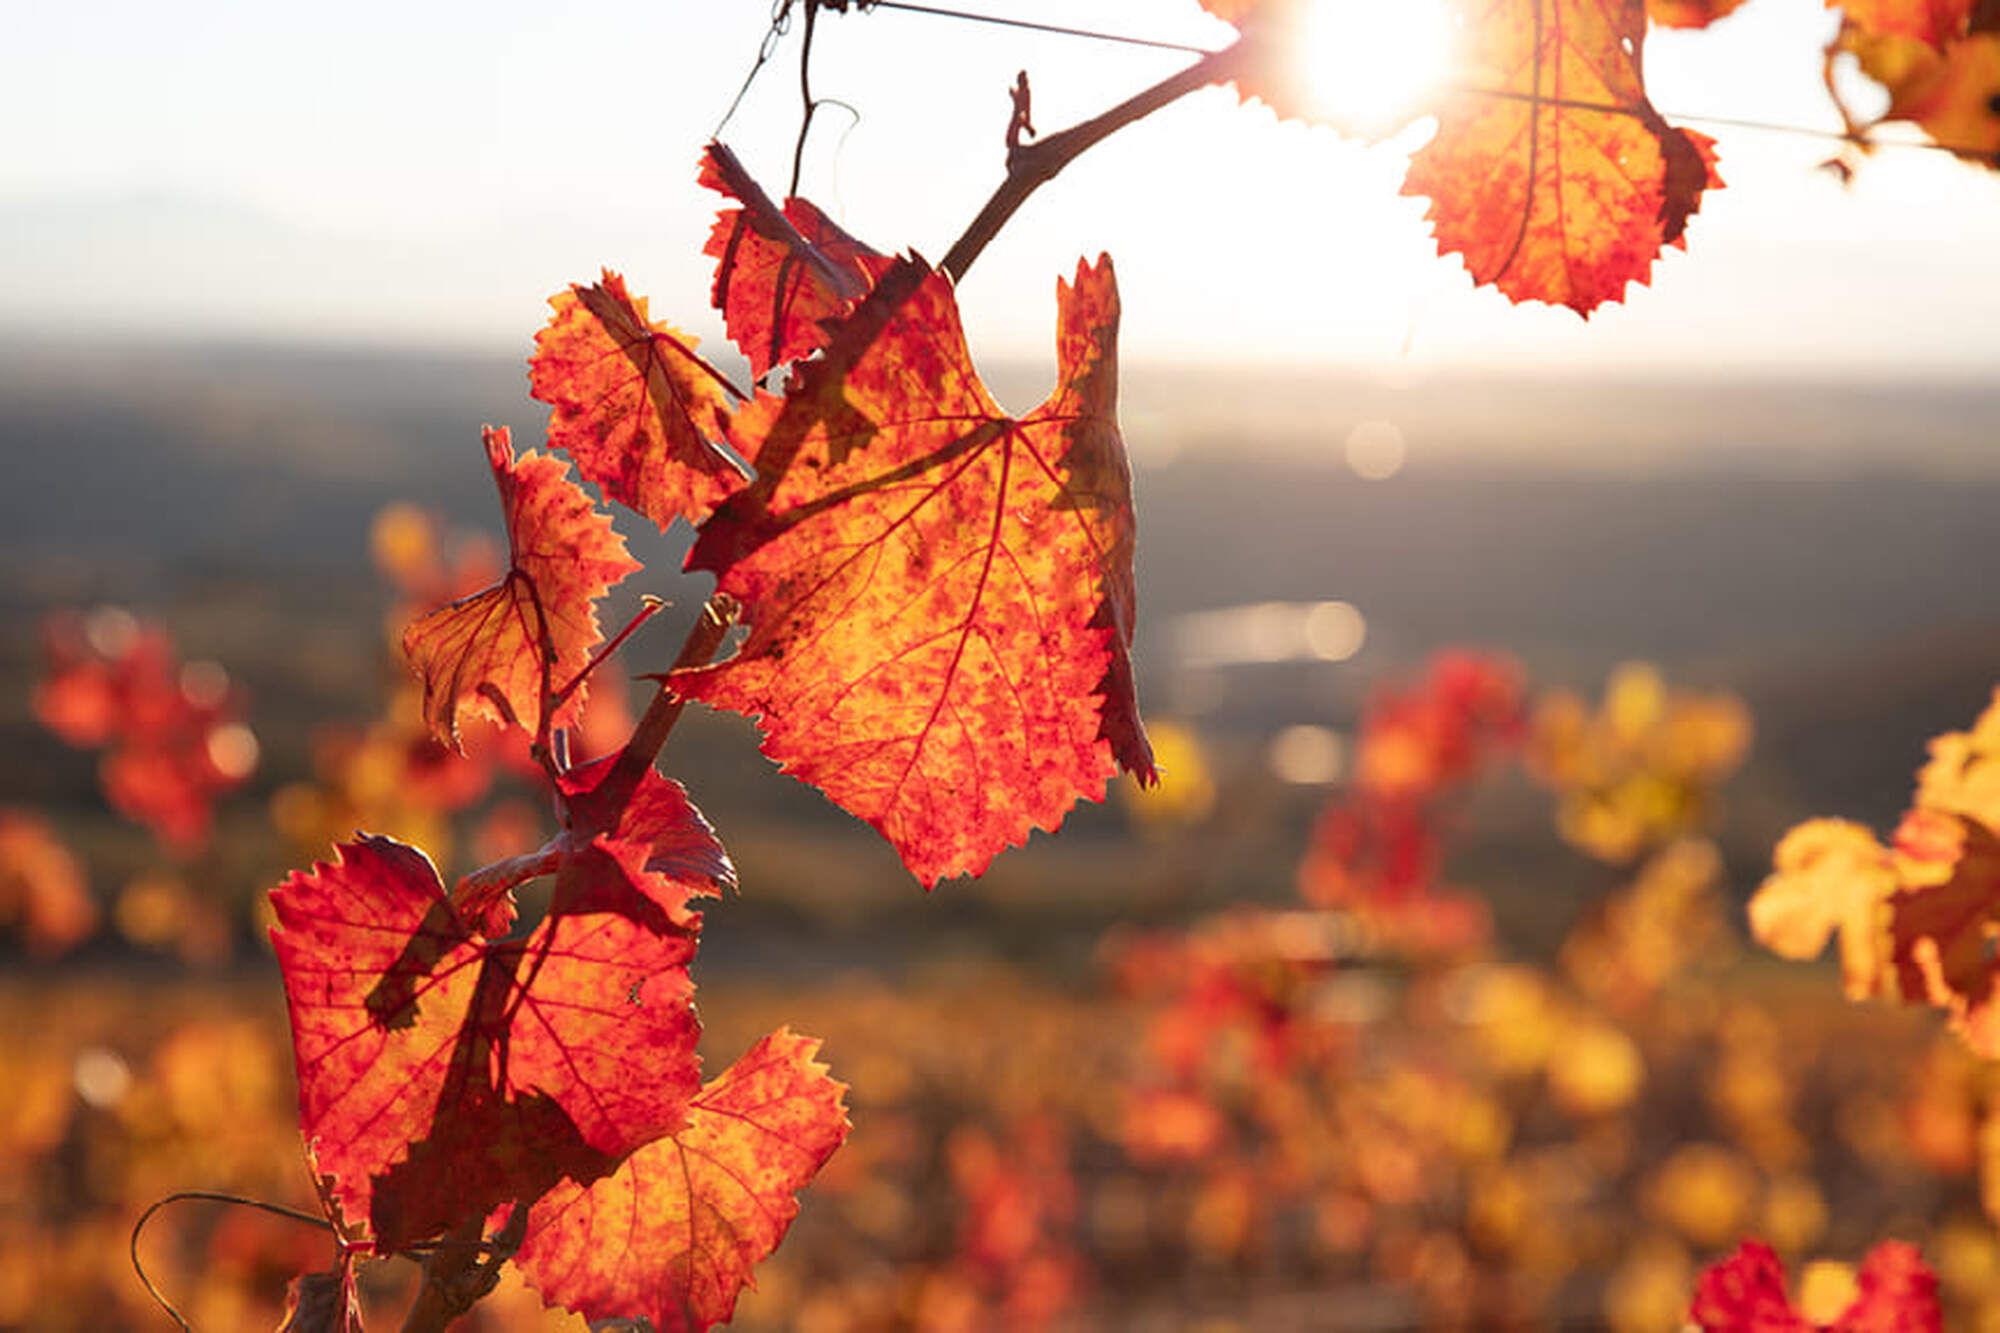 Golden red grape vines in the autumn sun.